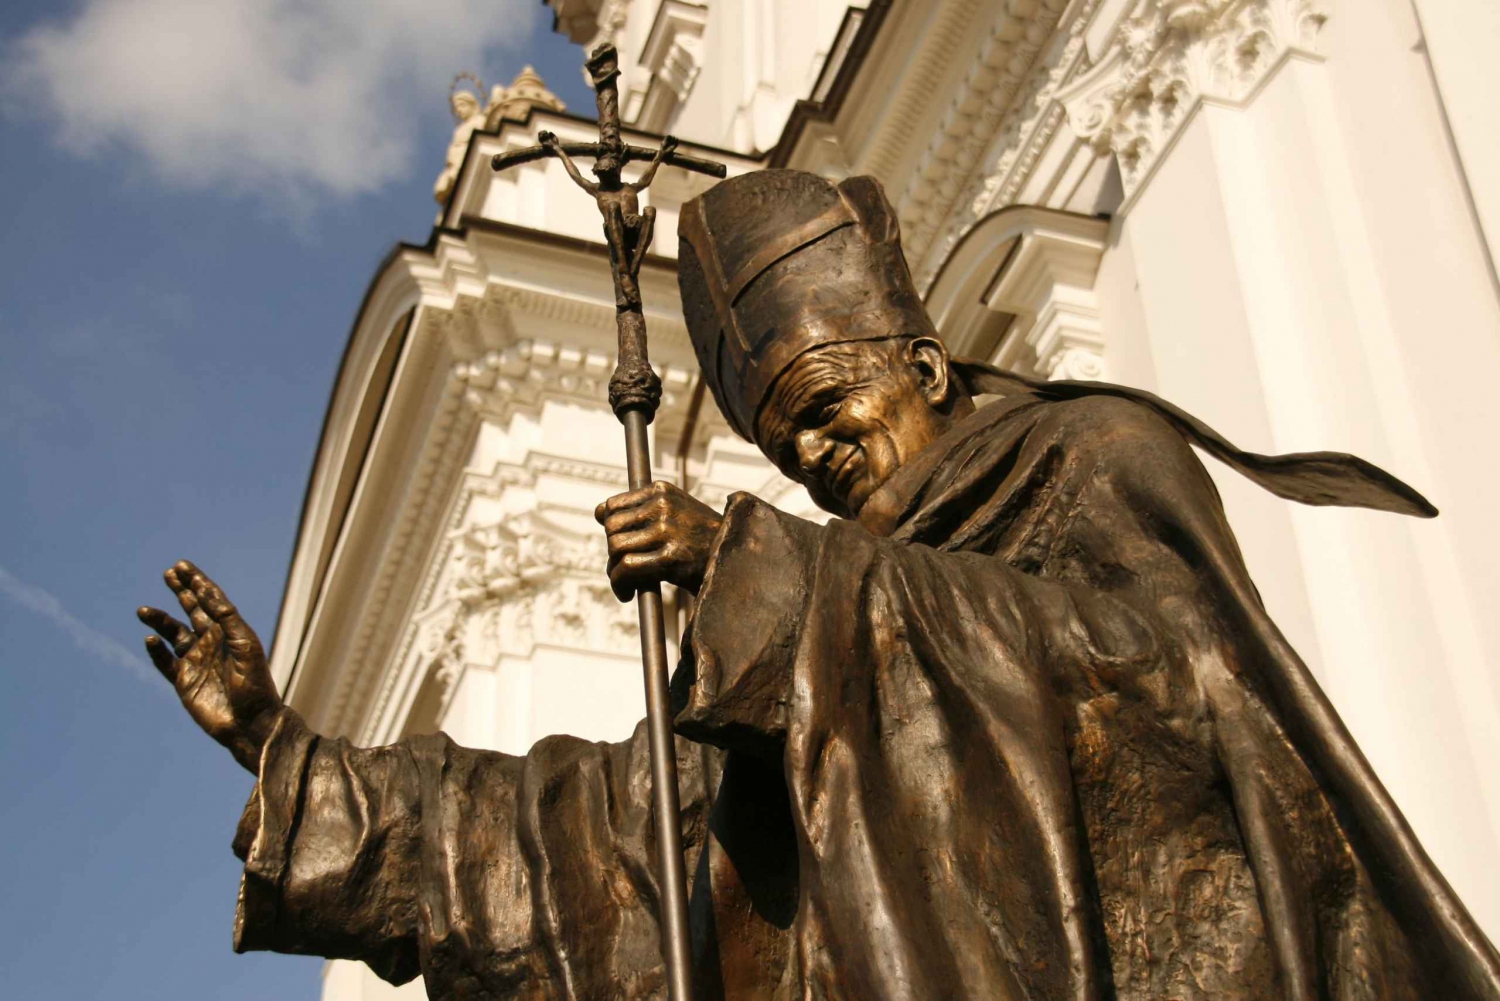 Matka Wadowiceen: paavi Johannes Paavali II:n kotikaupunki